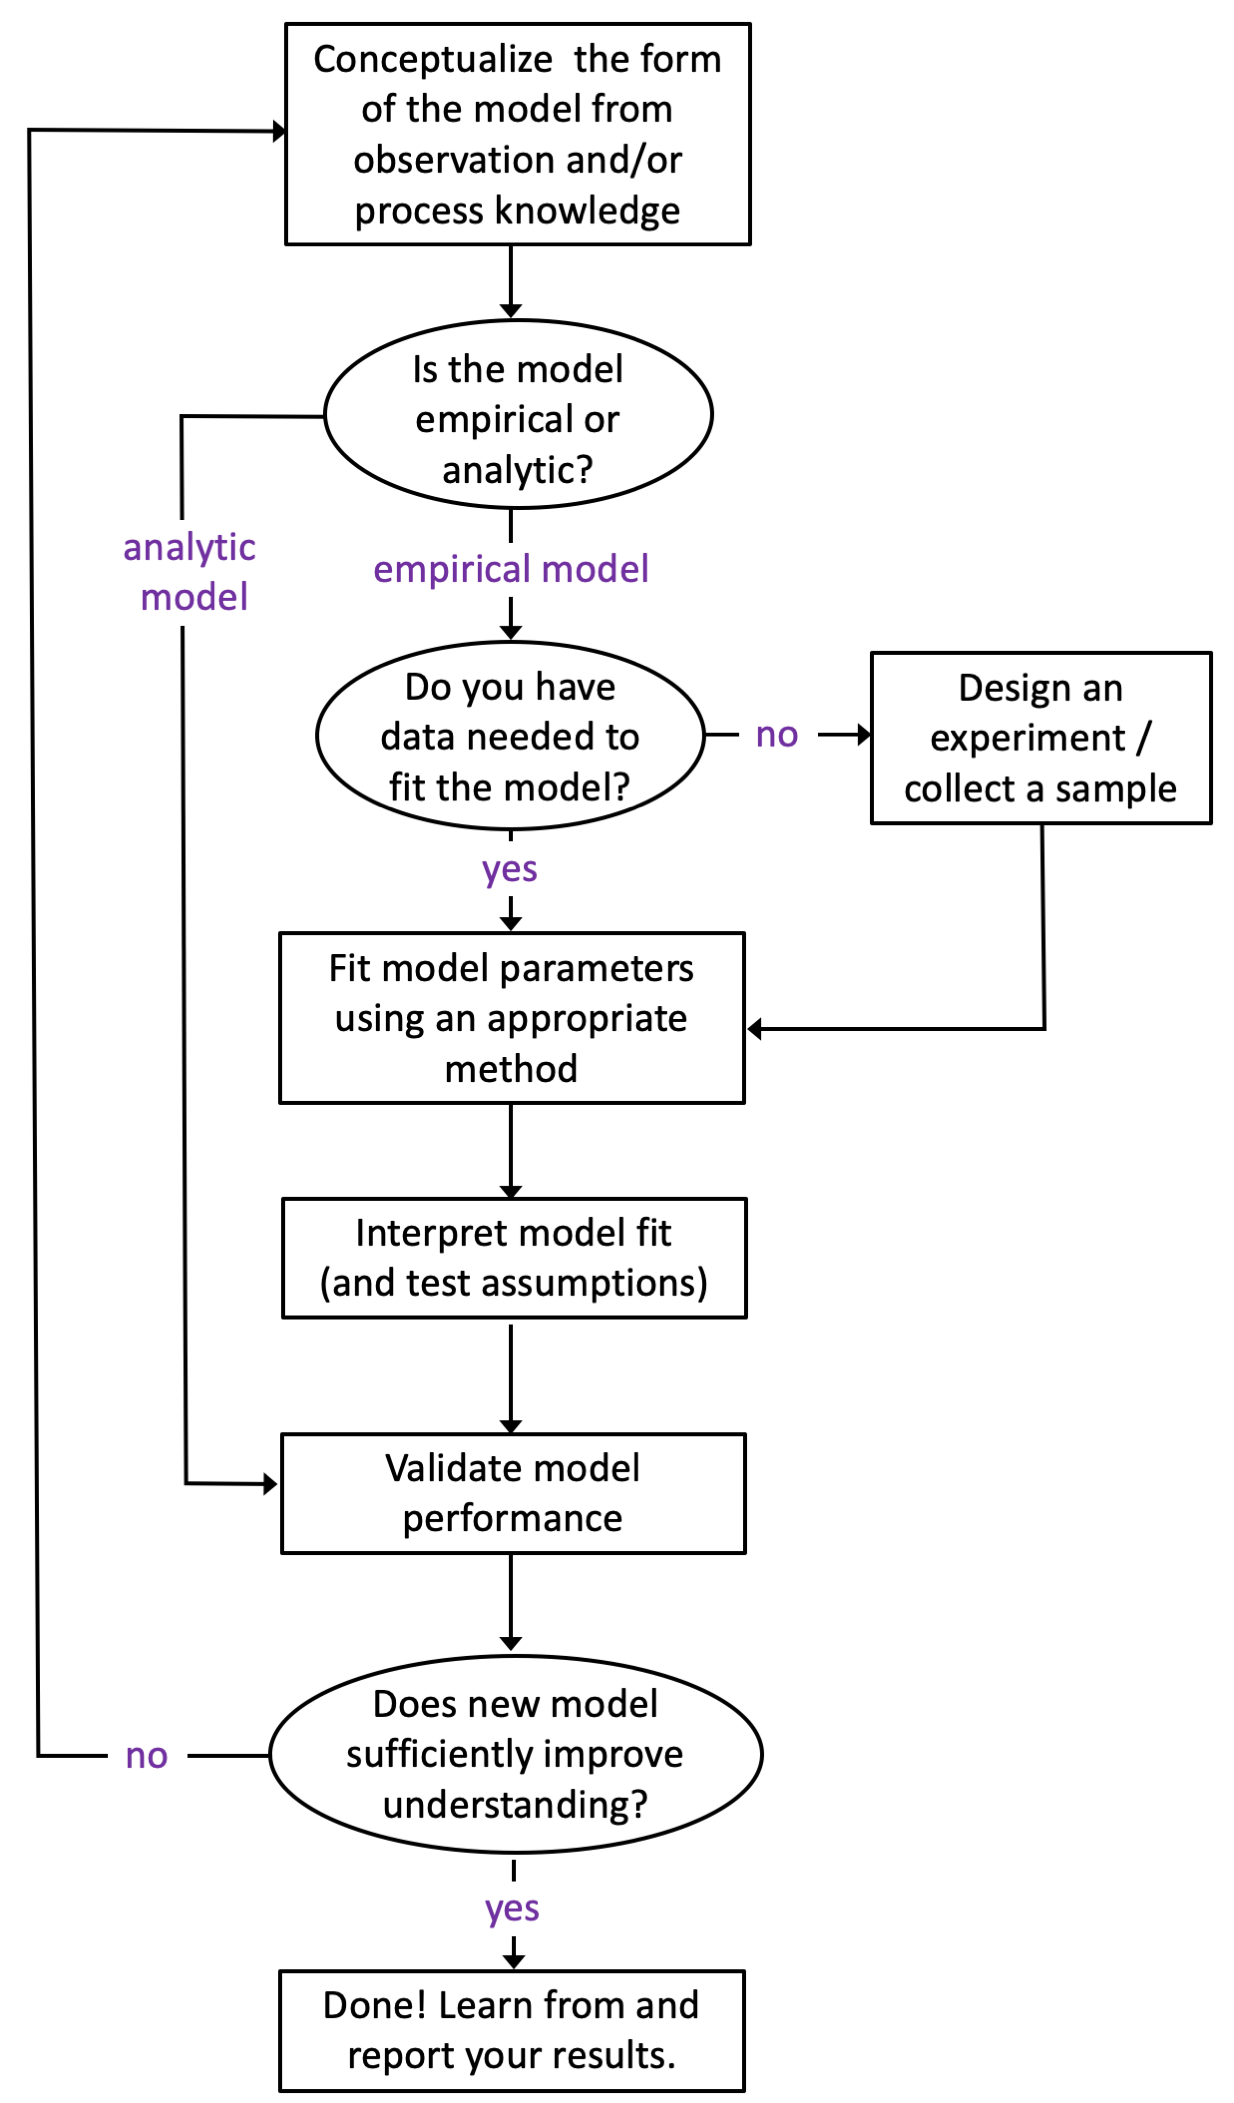 A generic process diagram for model conceptualization, development, and evaluation.